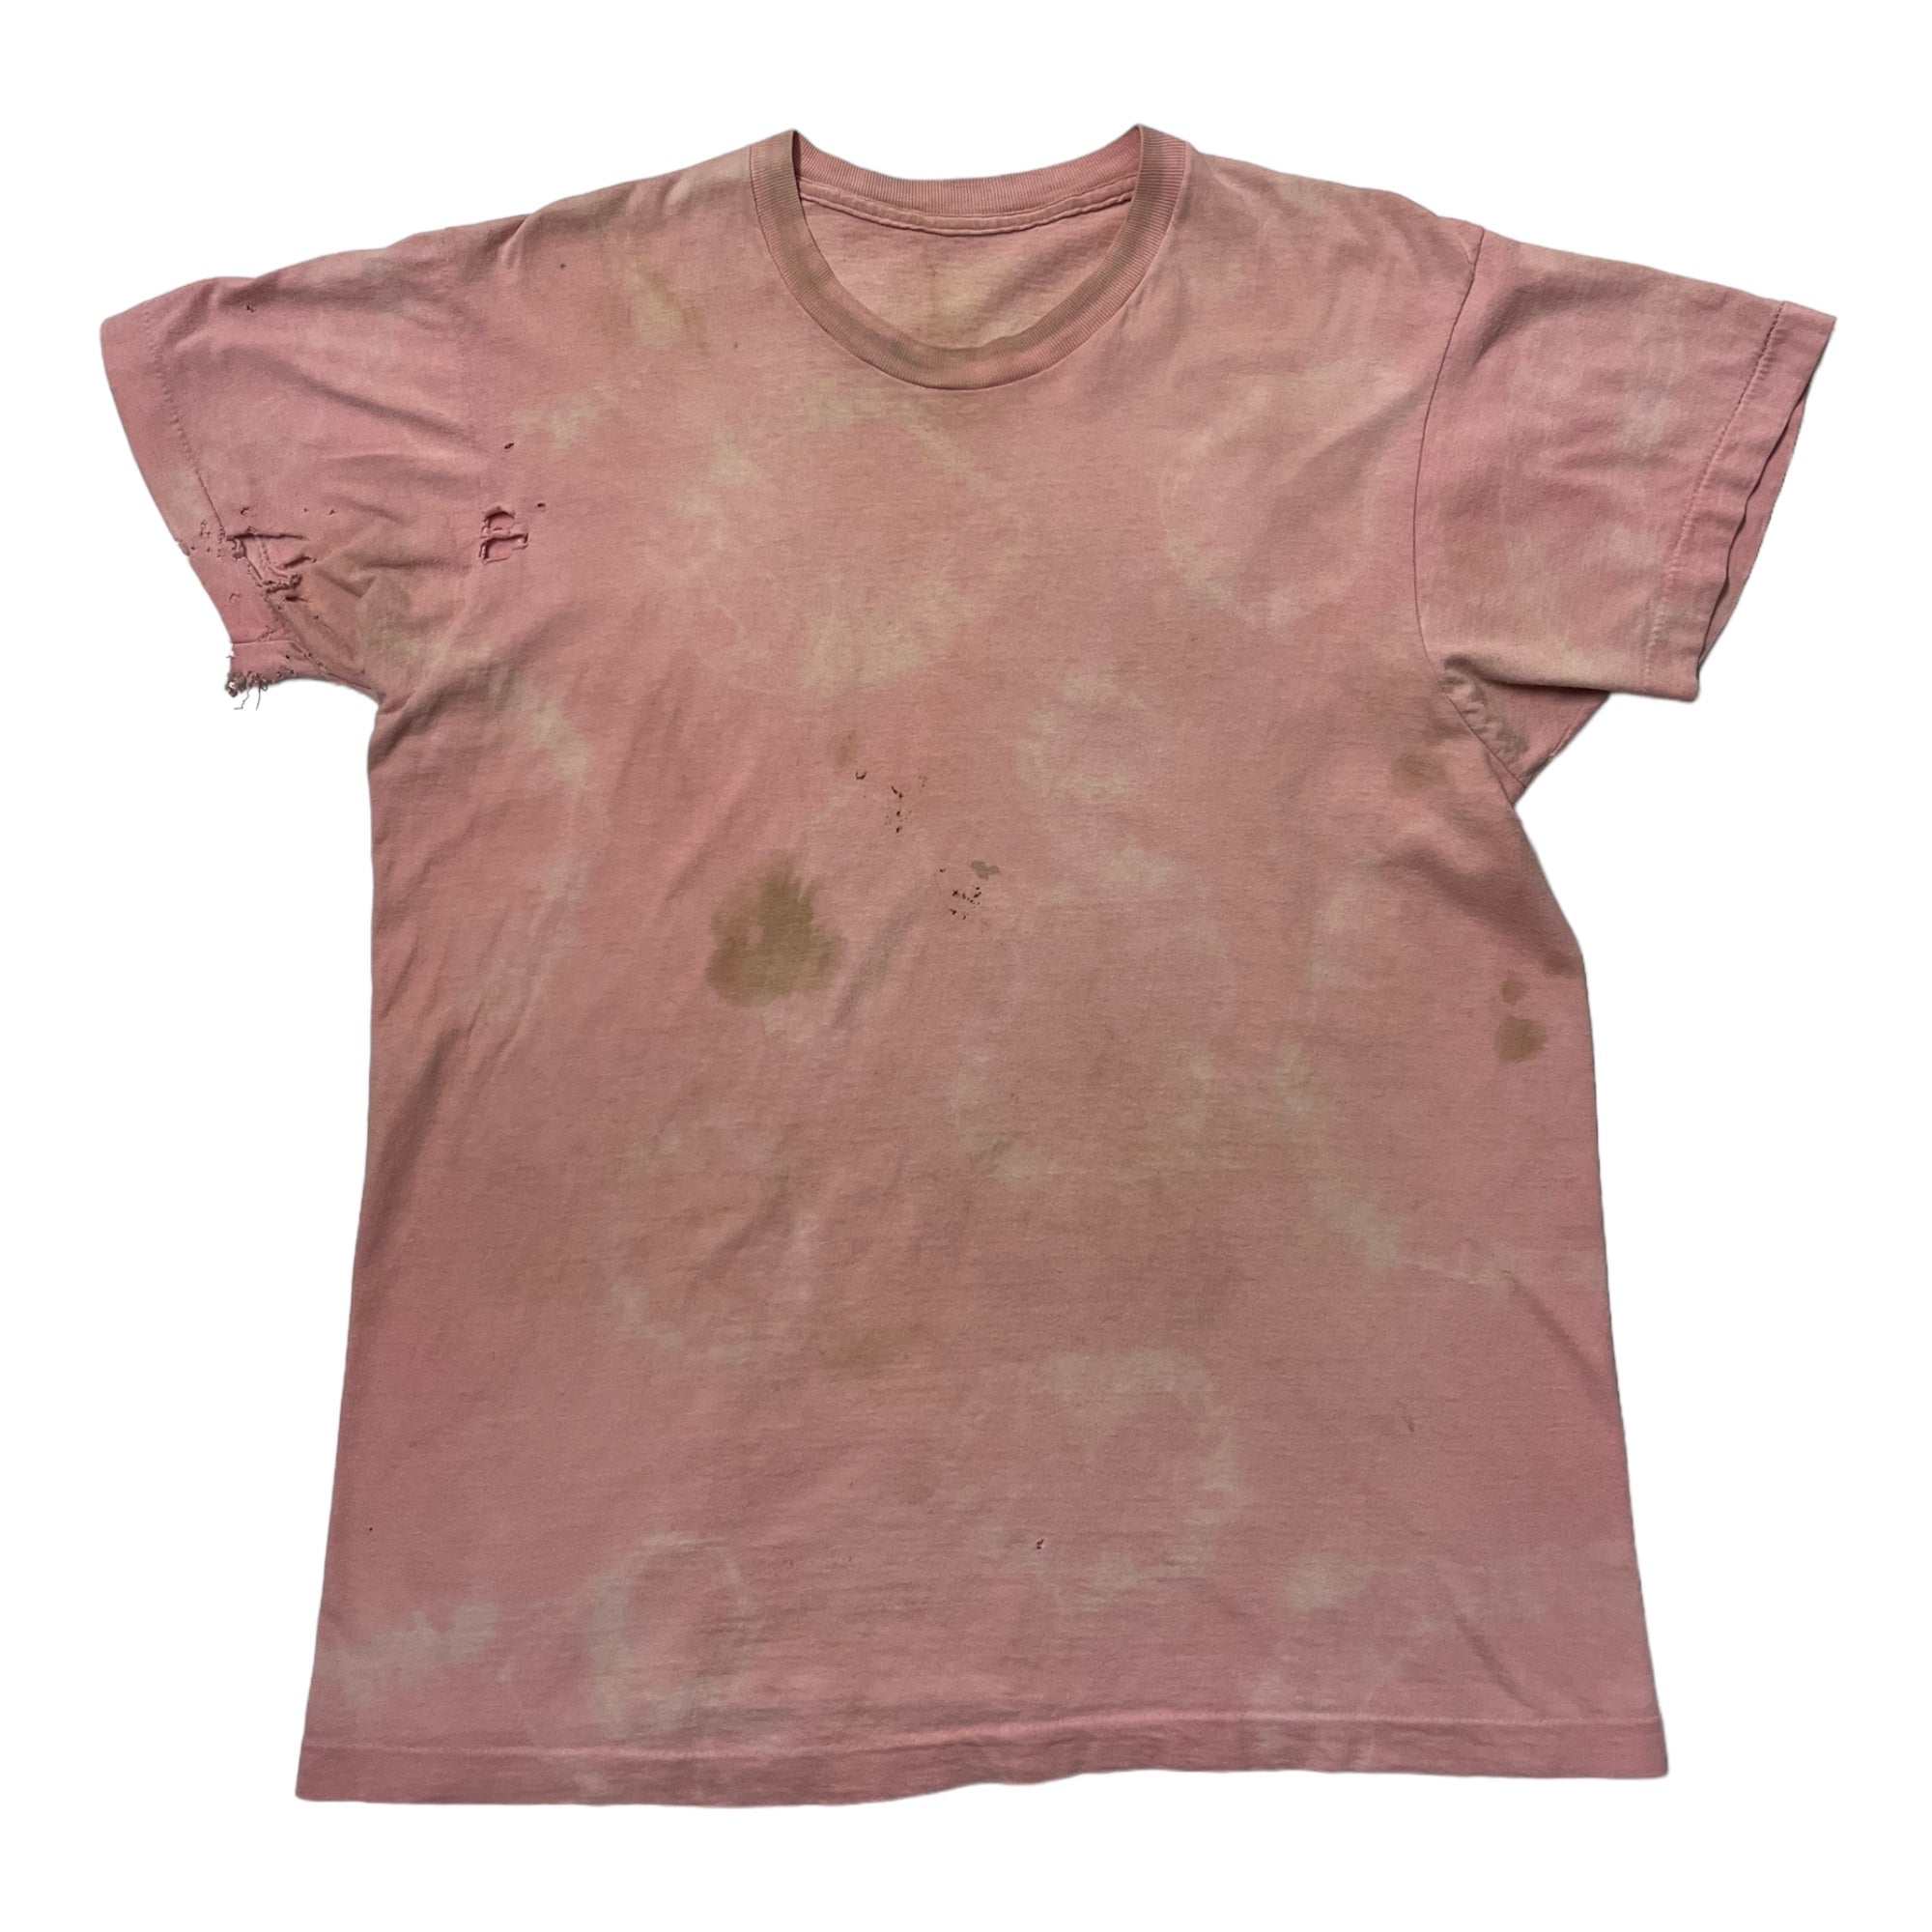 70s/80s Thrashed T-Shirt - Dirty Pink - L/XL